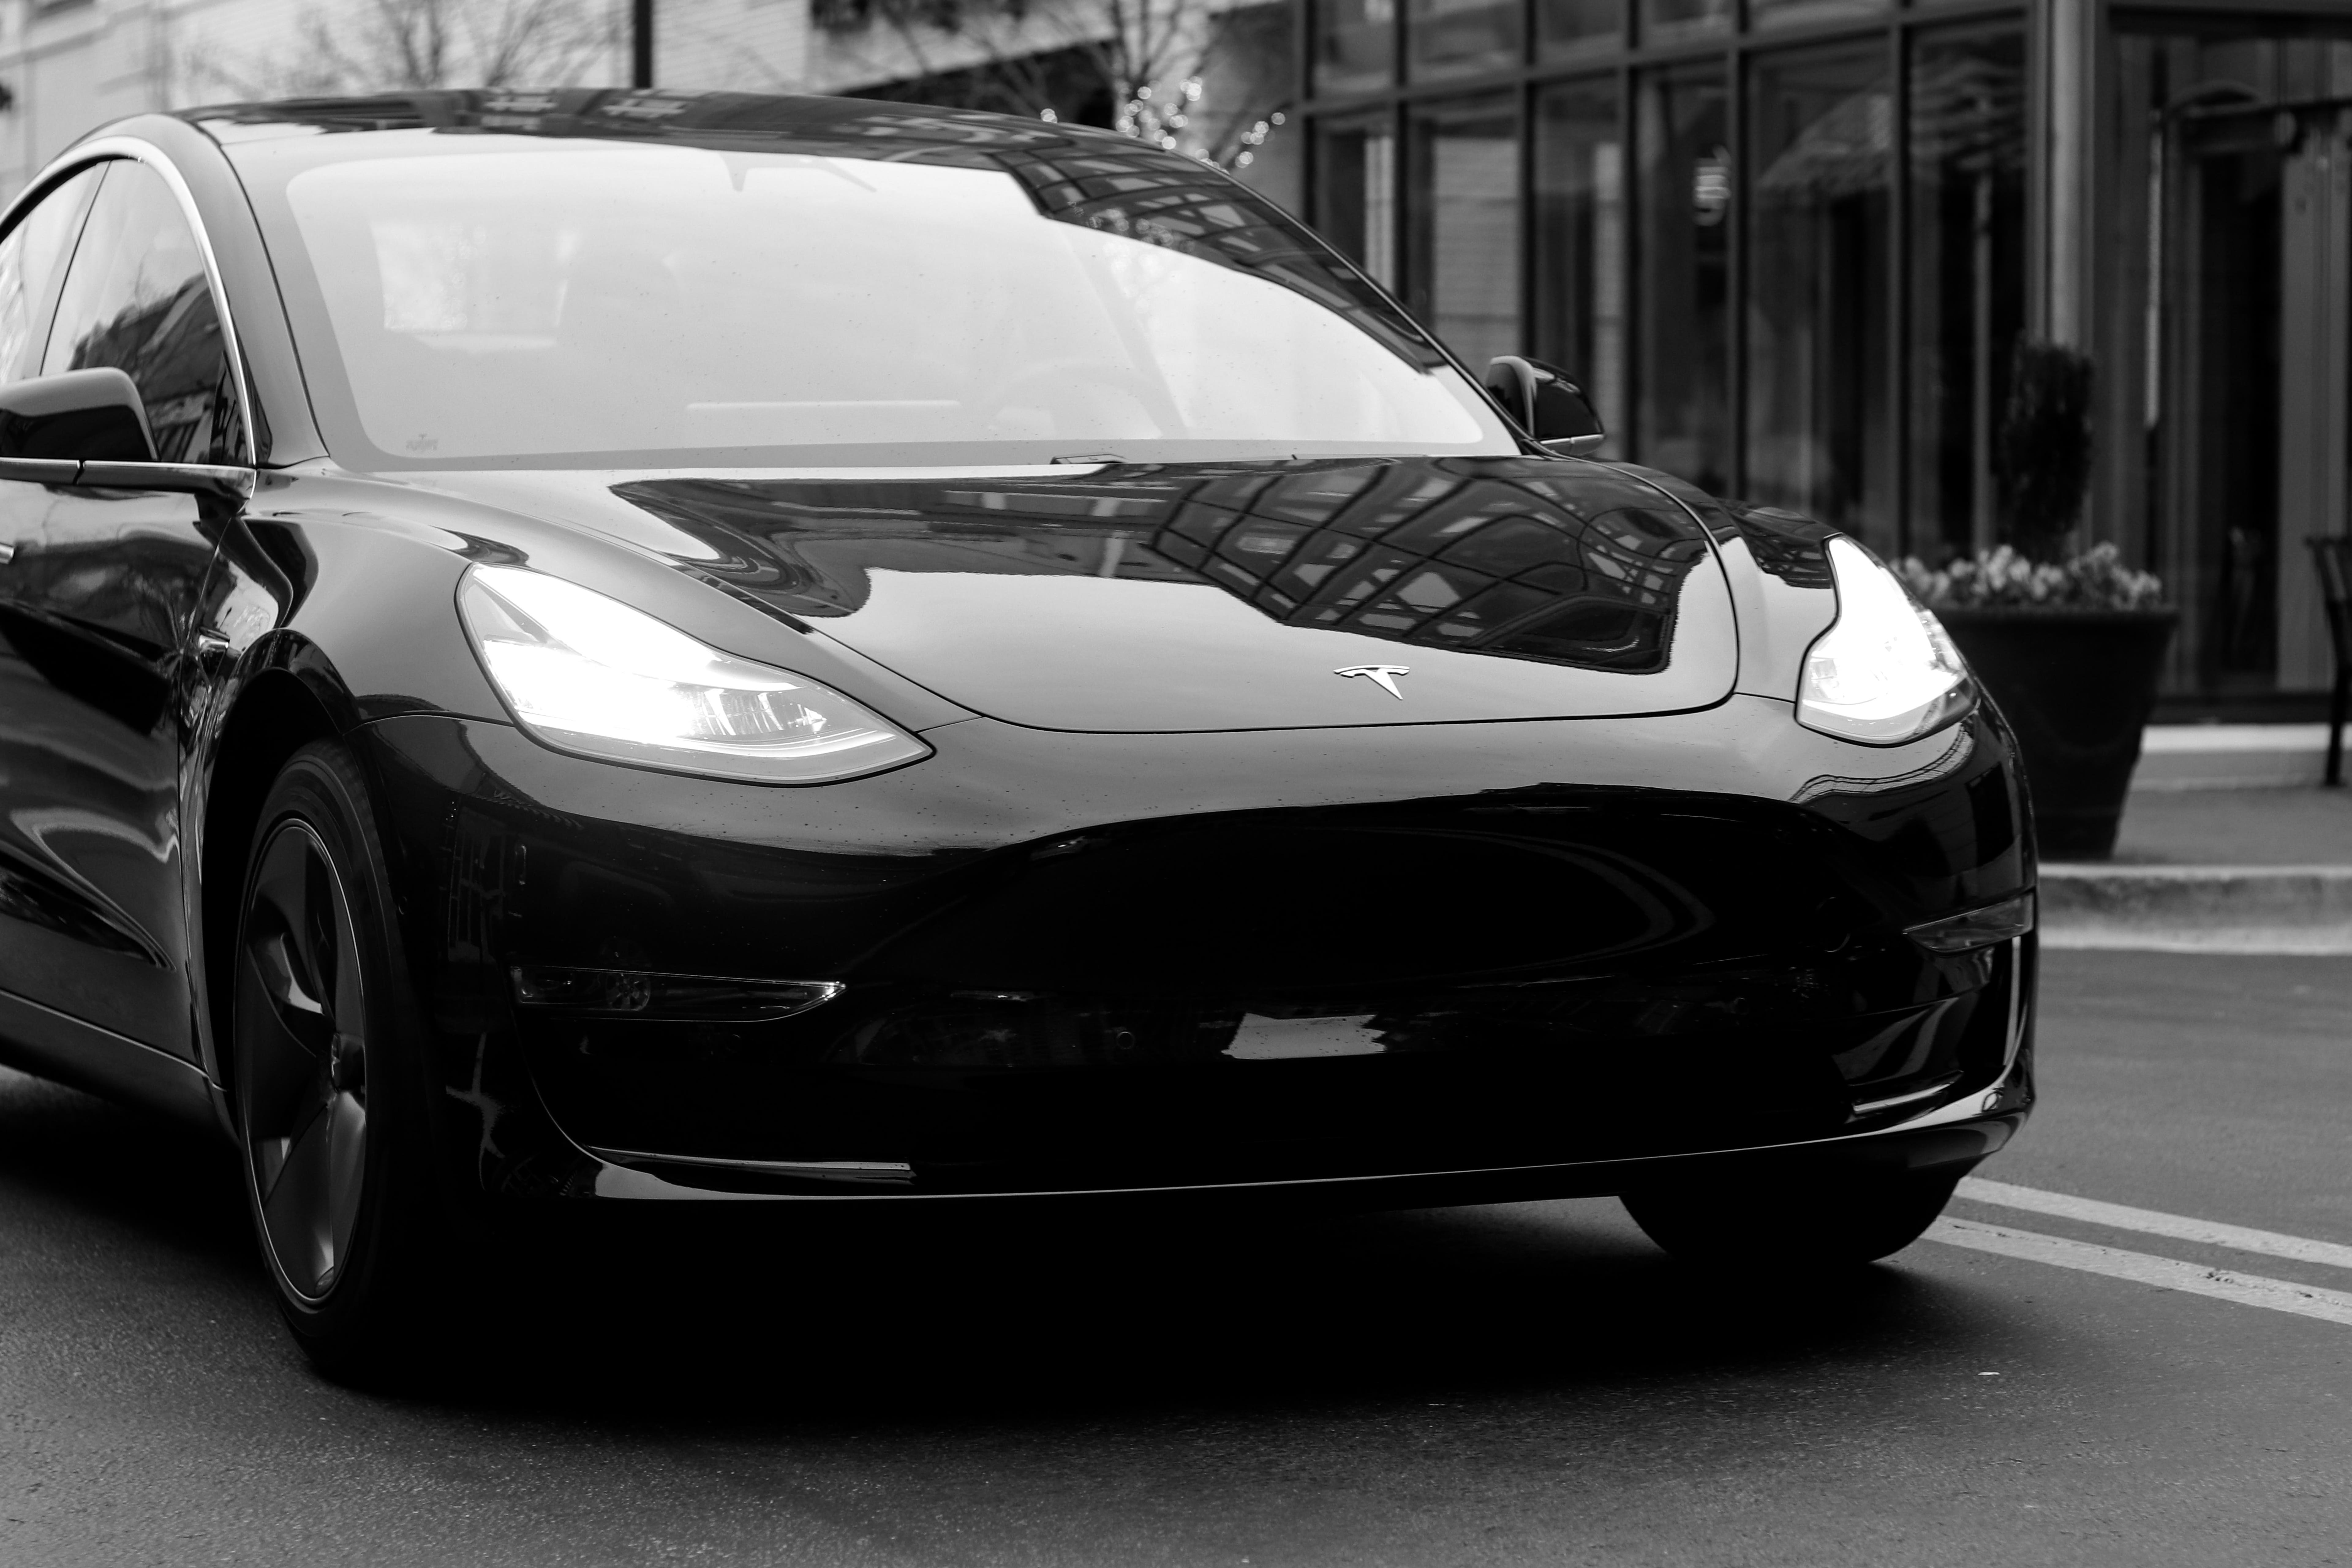 Tesla Q1 Deliveries To Beat Street Estimates, Says Wedbush